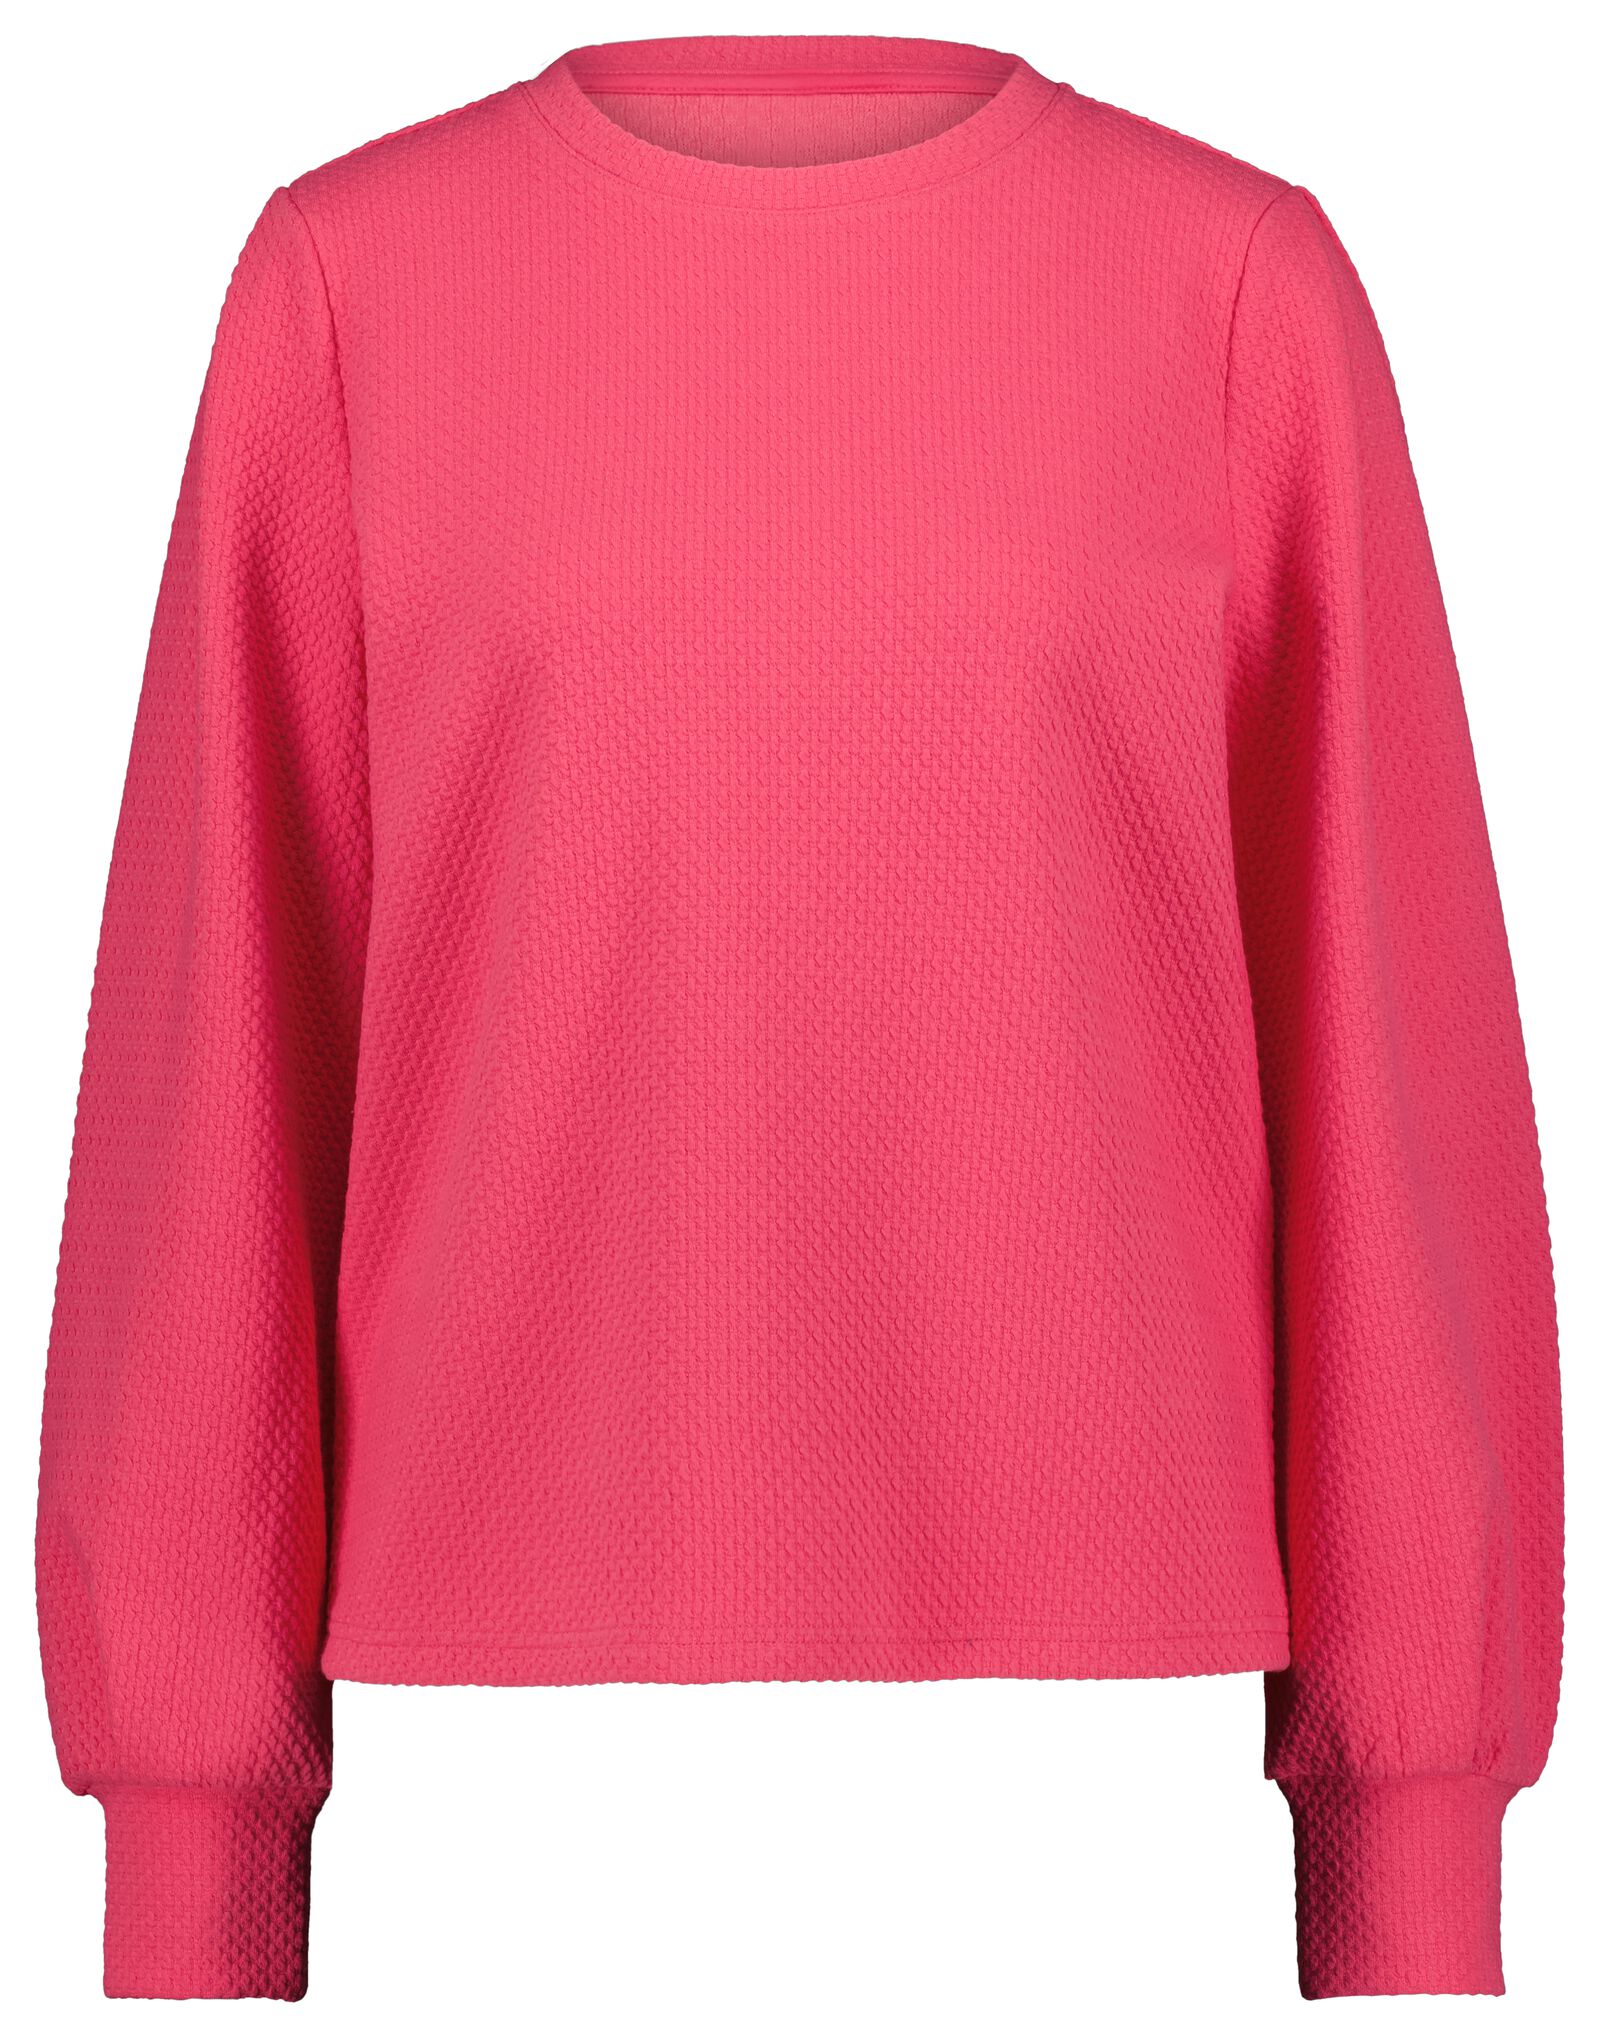 dames sweater Cherry roze - 1000029488 - HEMA